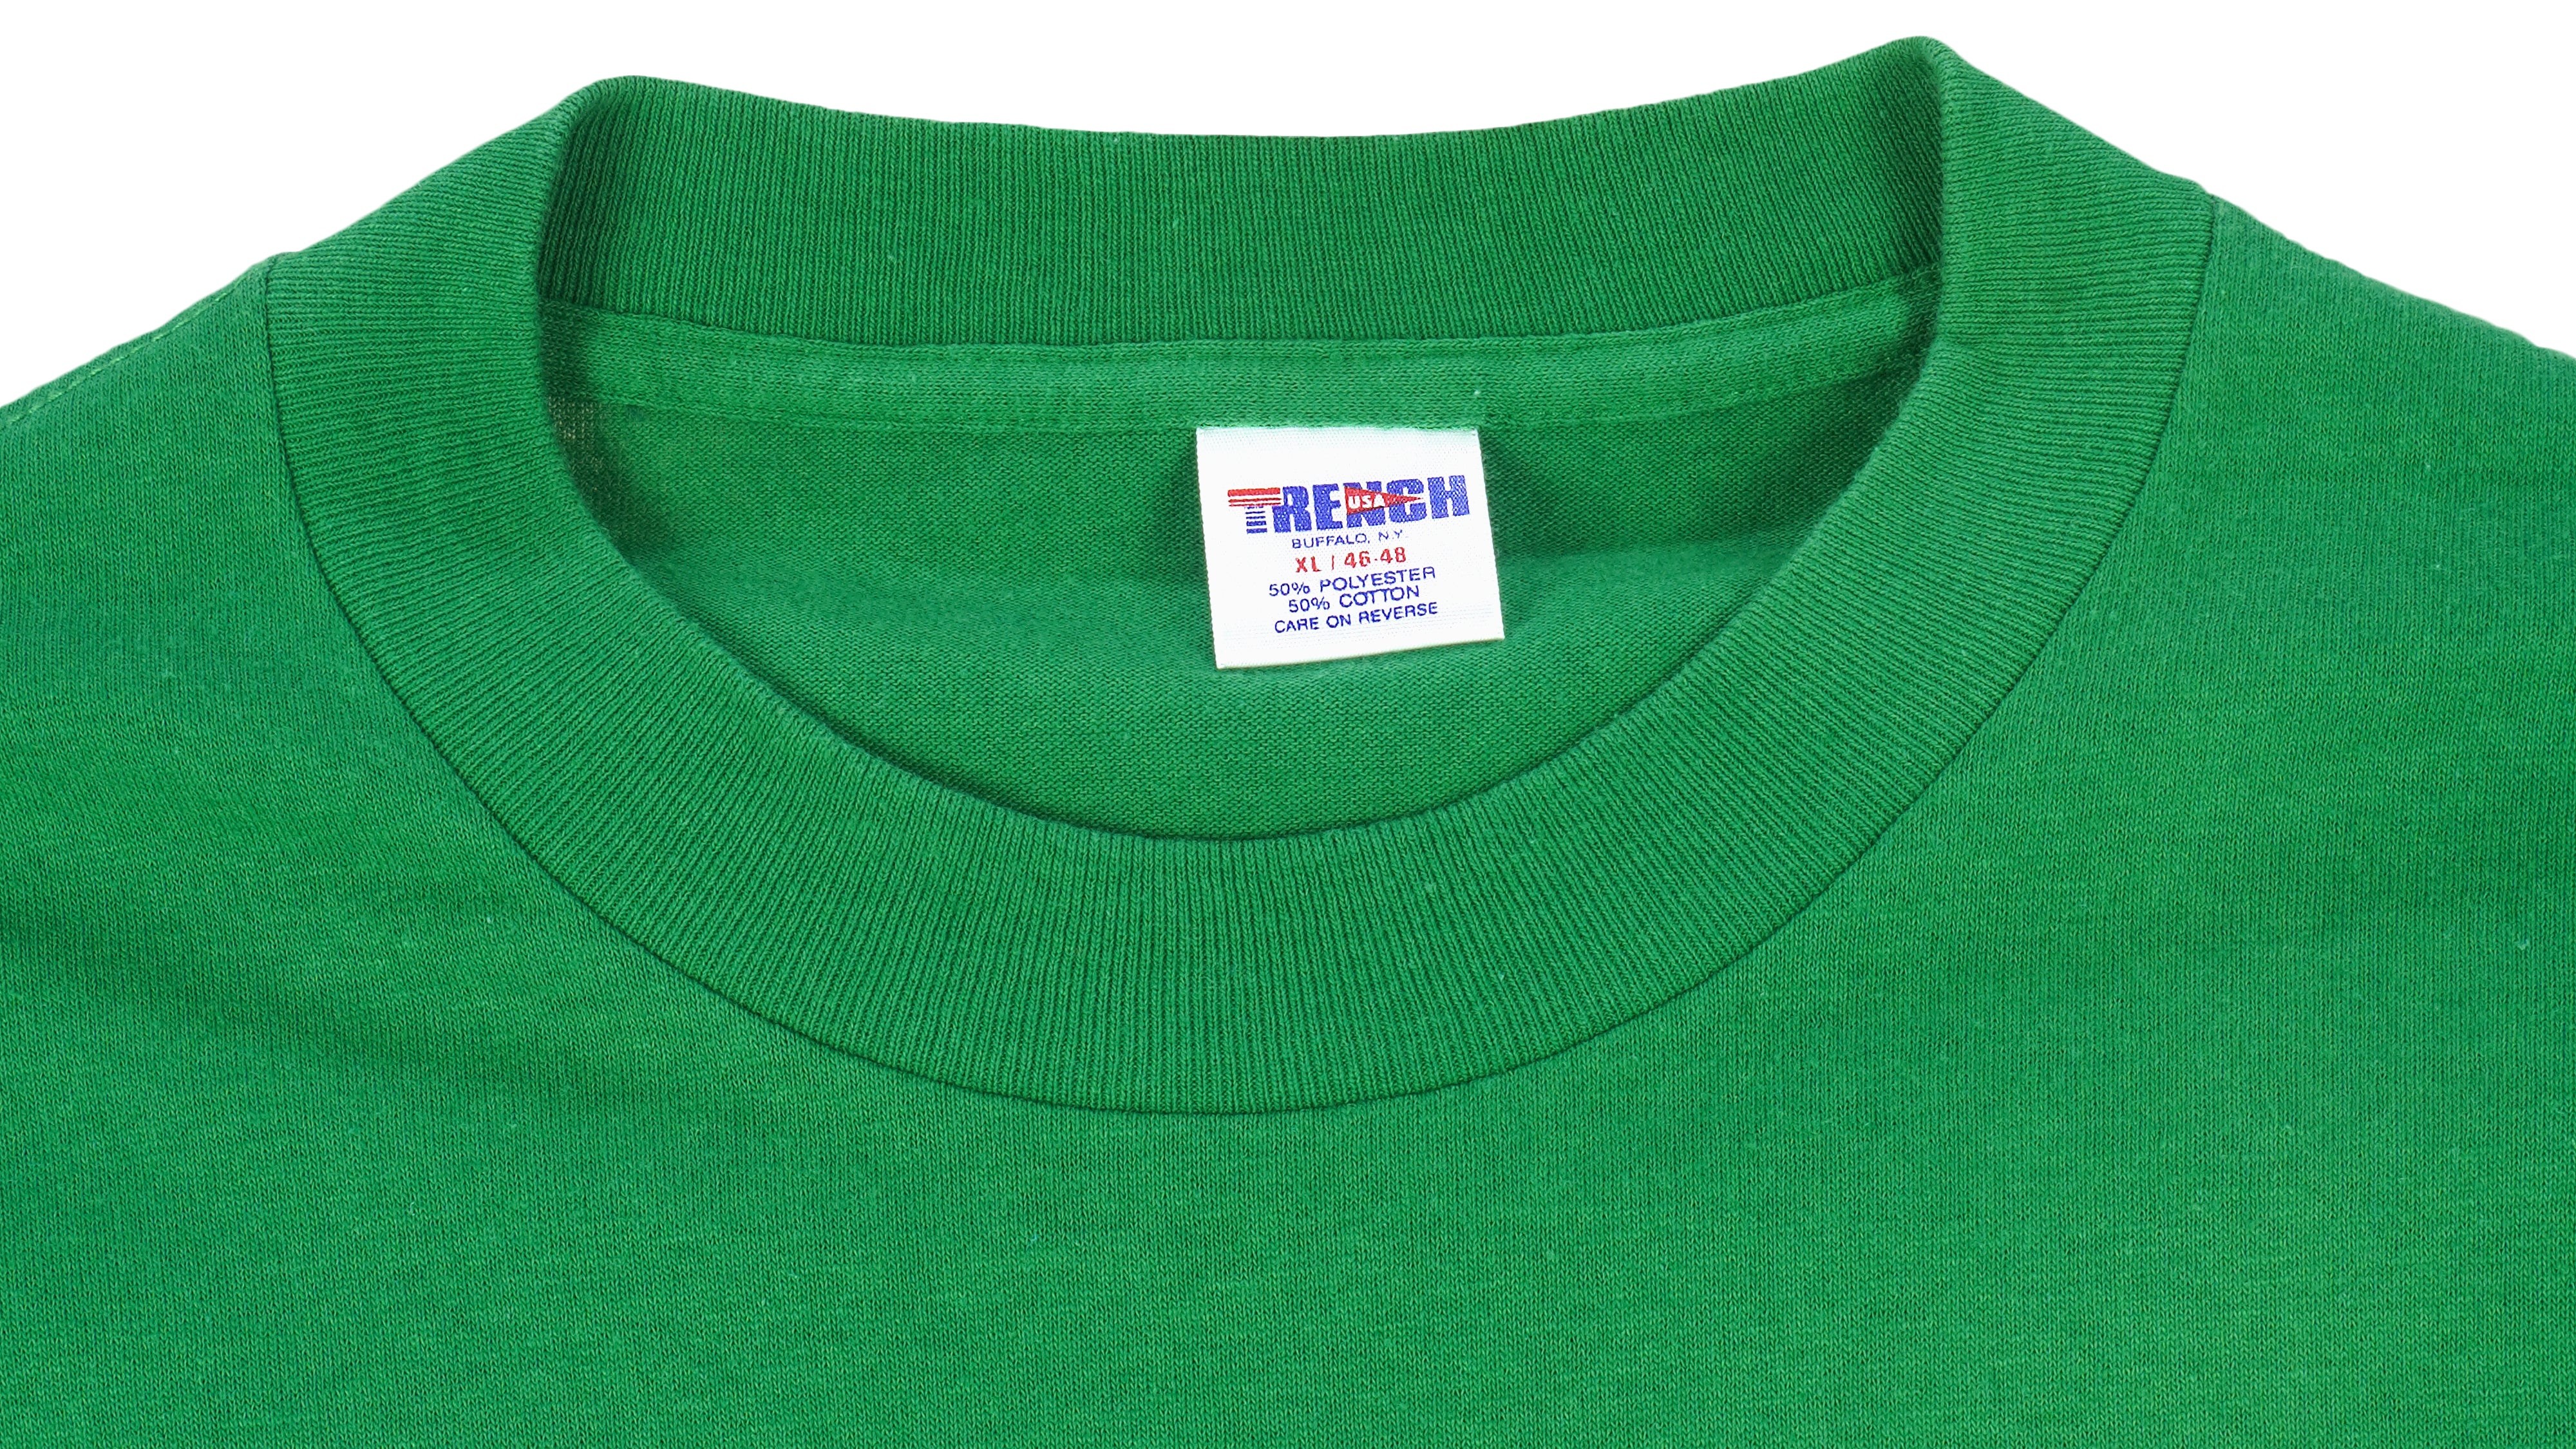 Boston Celtics Vintage Tee Shirt 50/50 Cotton Polyester 